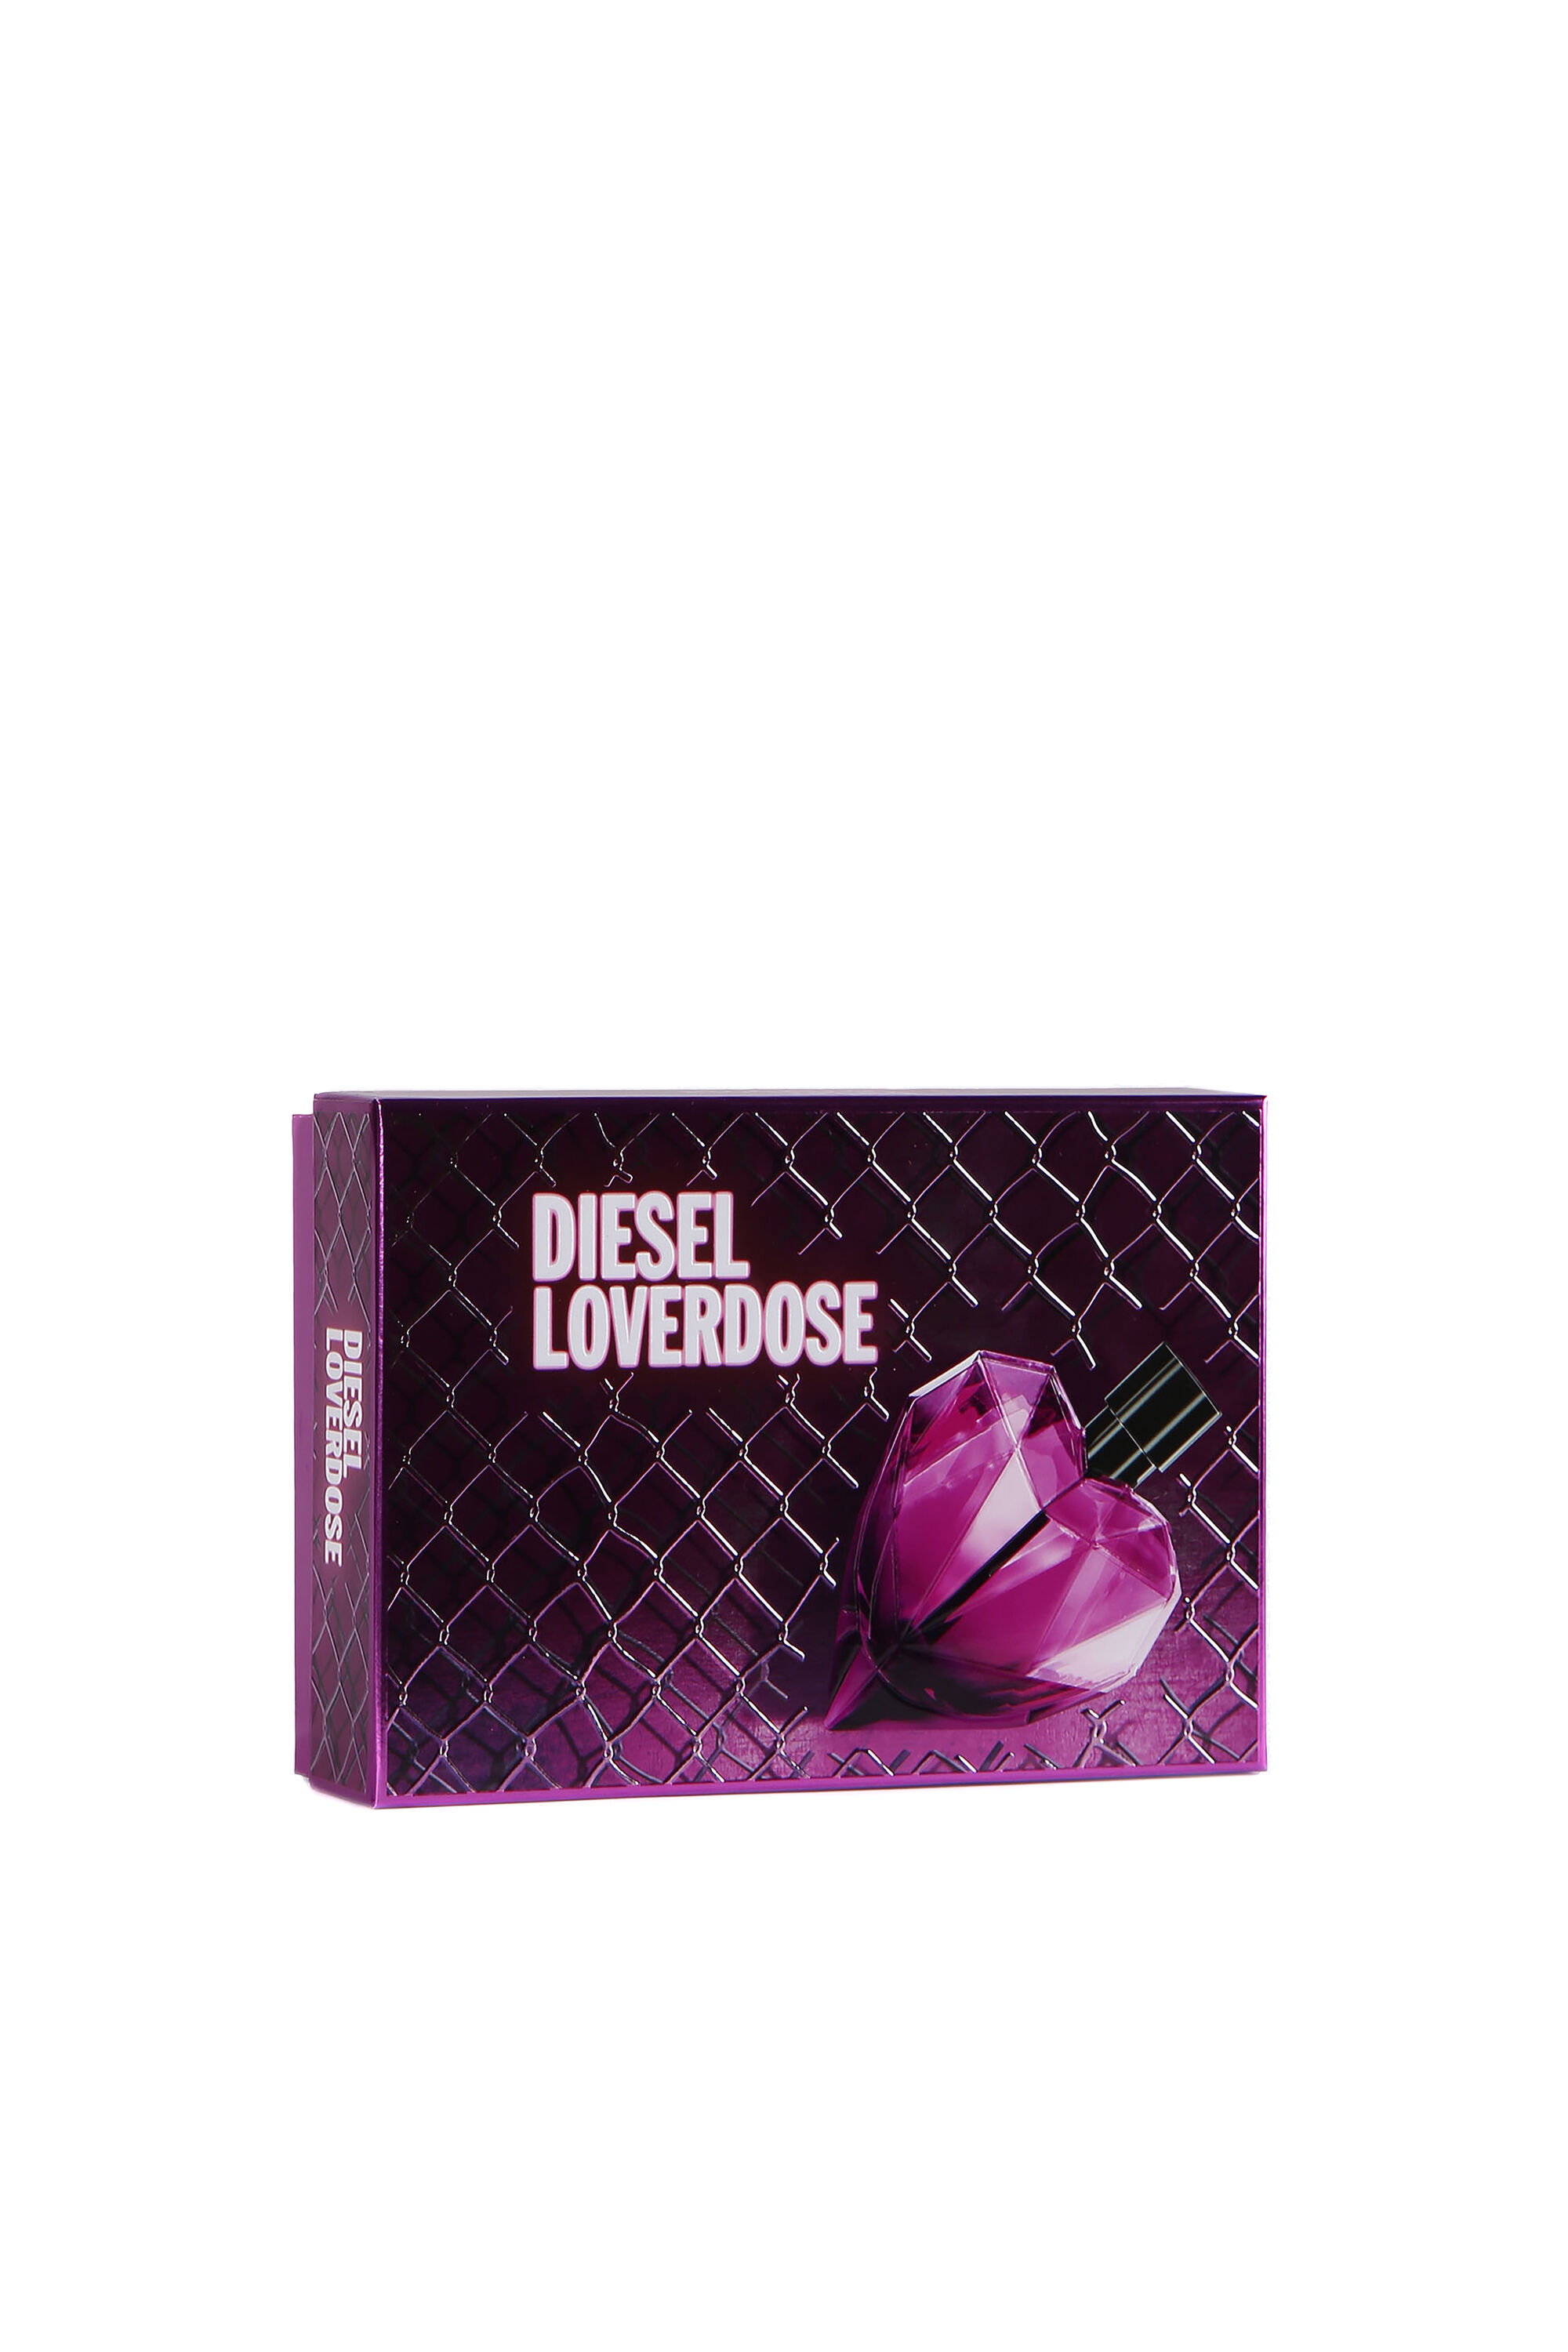 Diesel - LOVERDOSE 50ML GIFT SET,  - Image 1